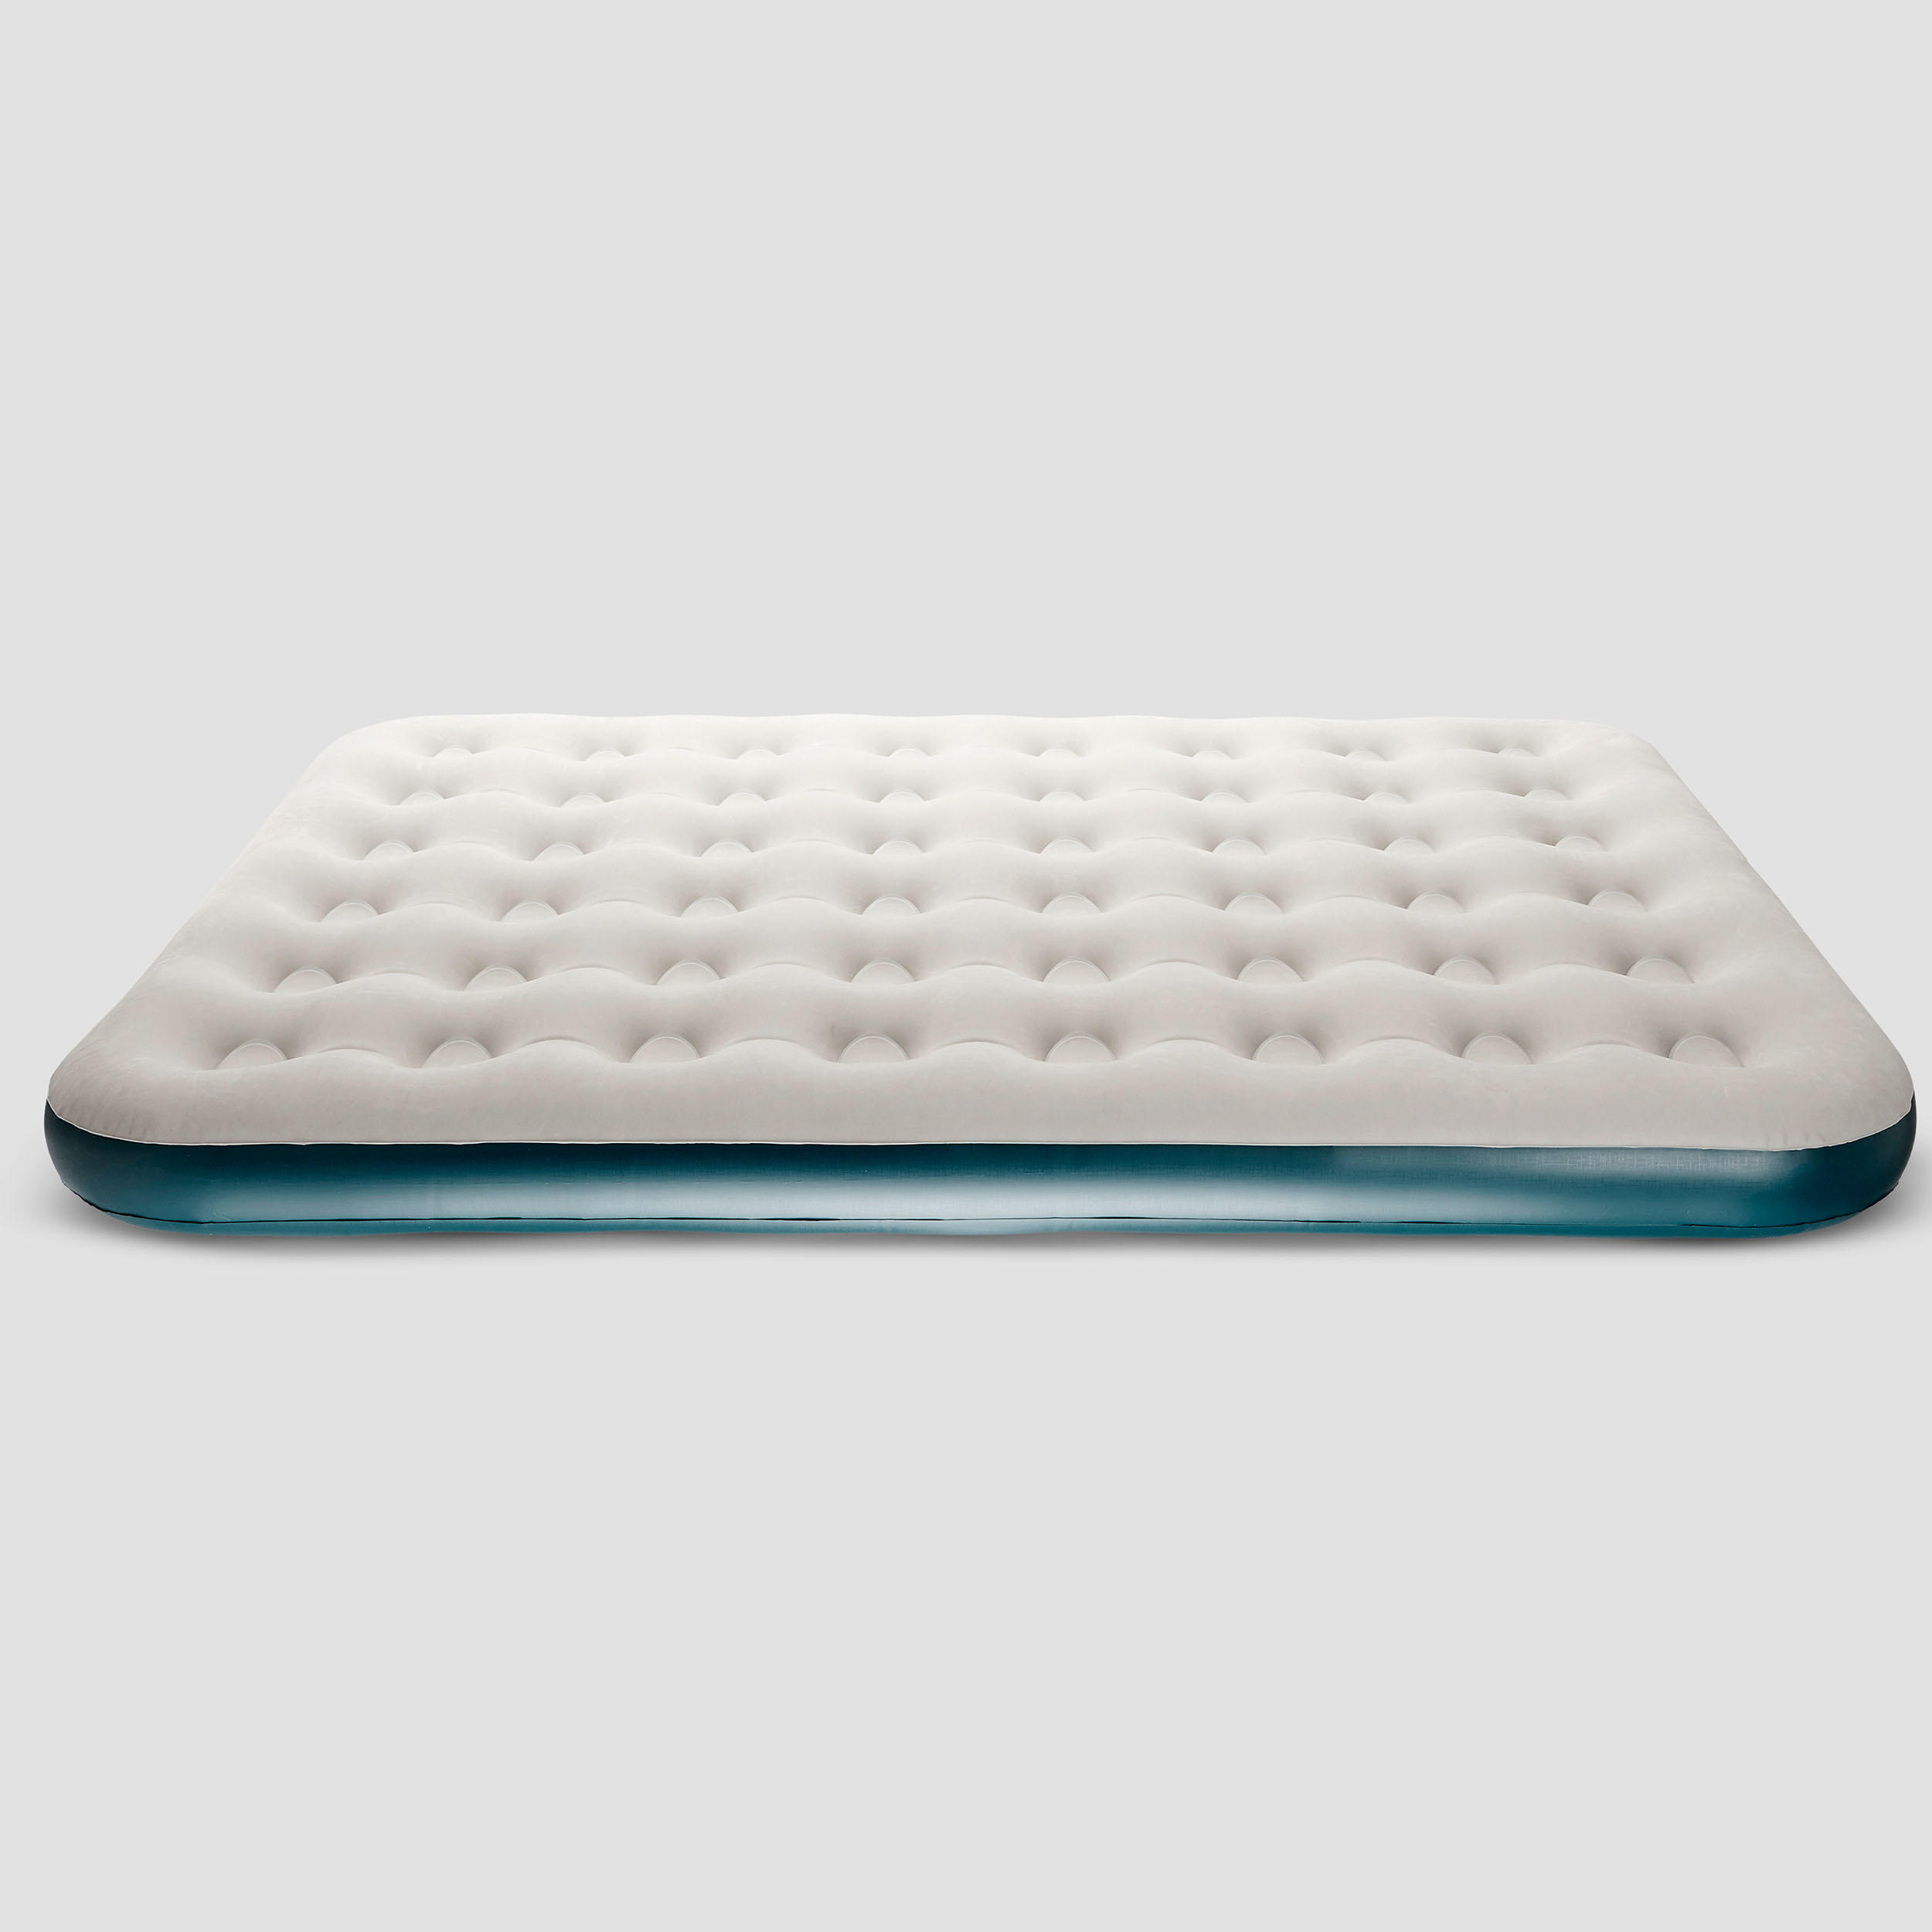 decathlon mattress